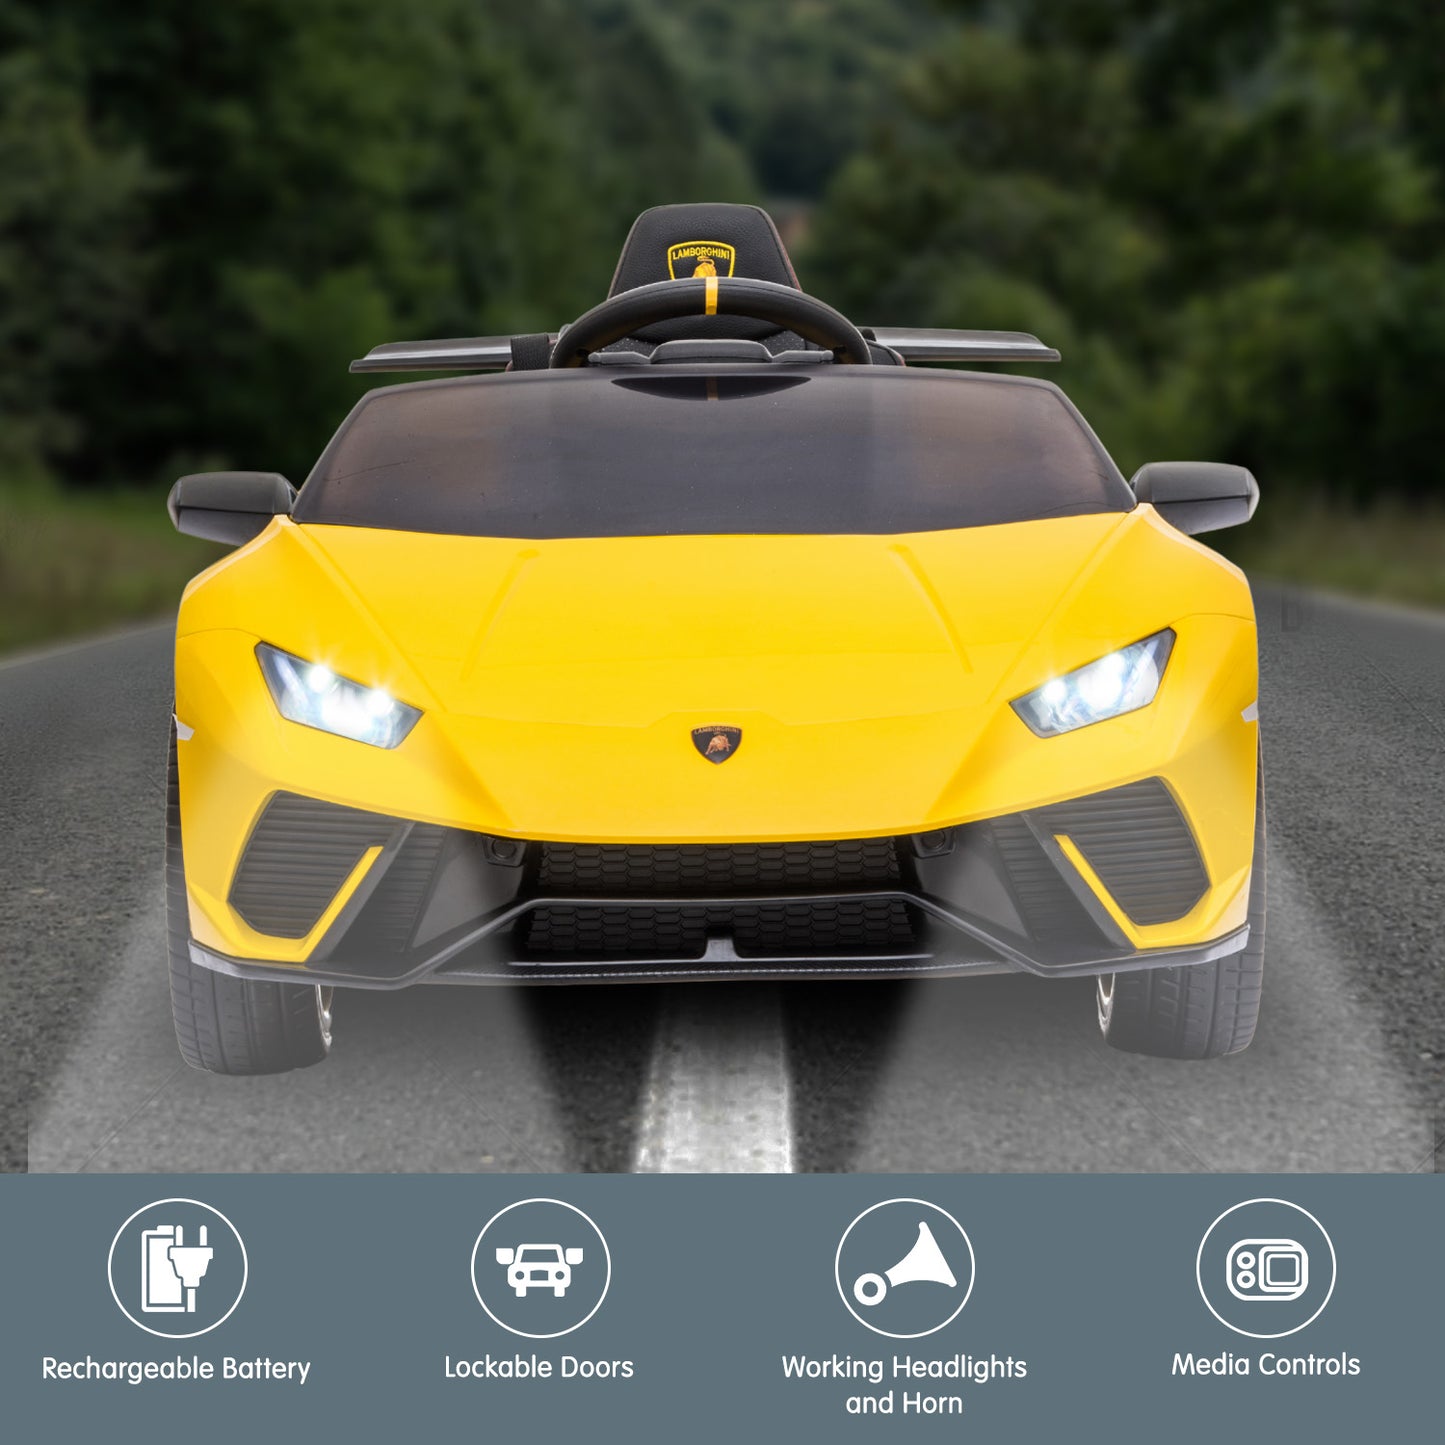 Lamborghini Performante Kids Electric Ride On Car - Yellow